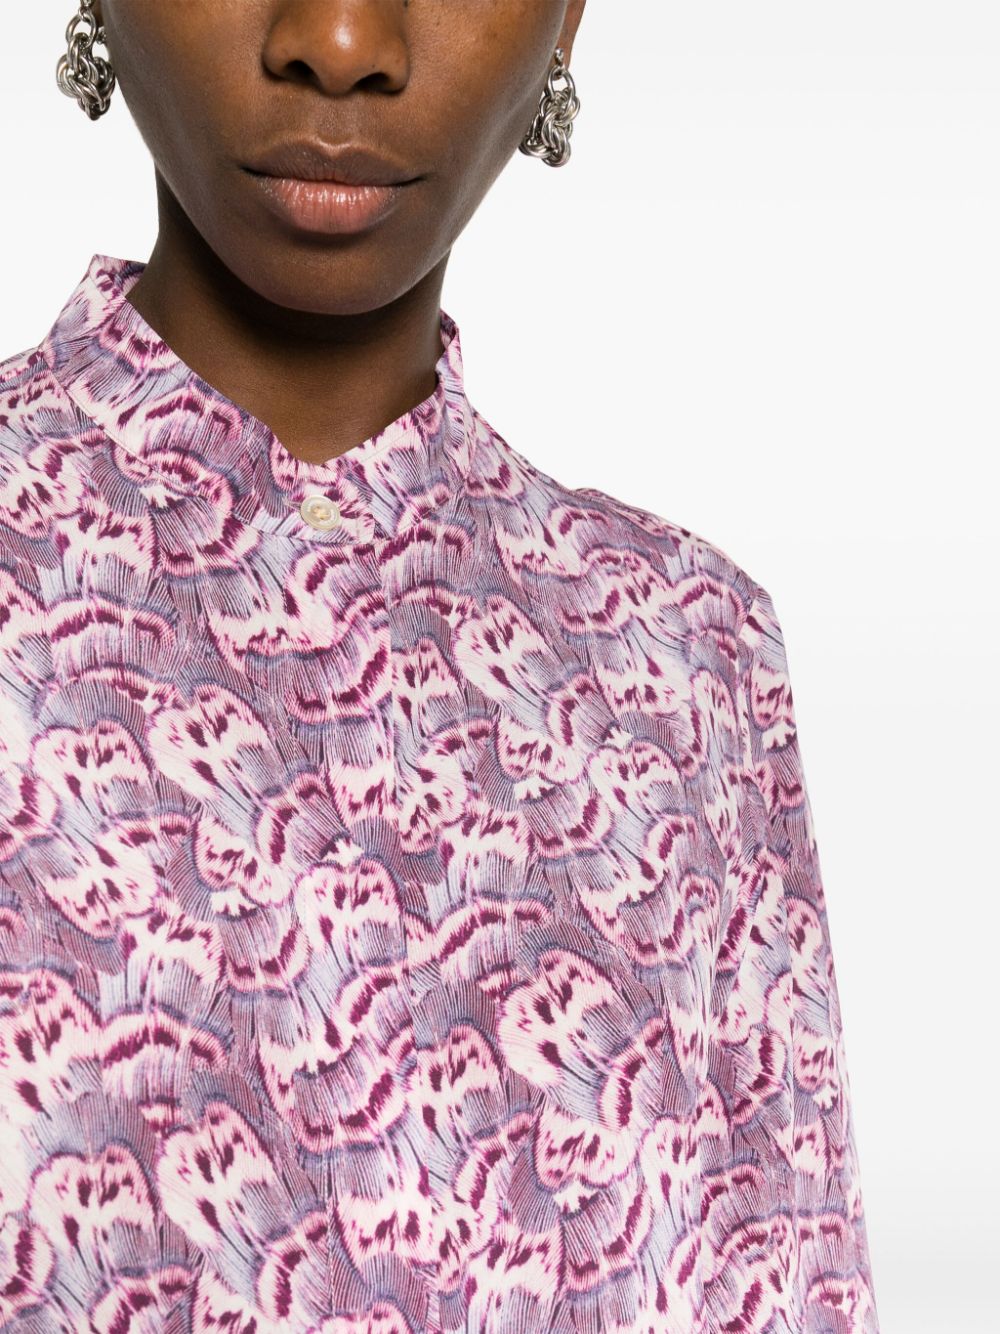 llda floral-print shirt<BR/><BR/><BR/>